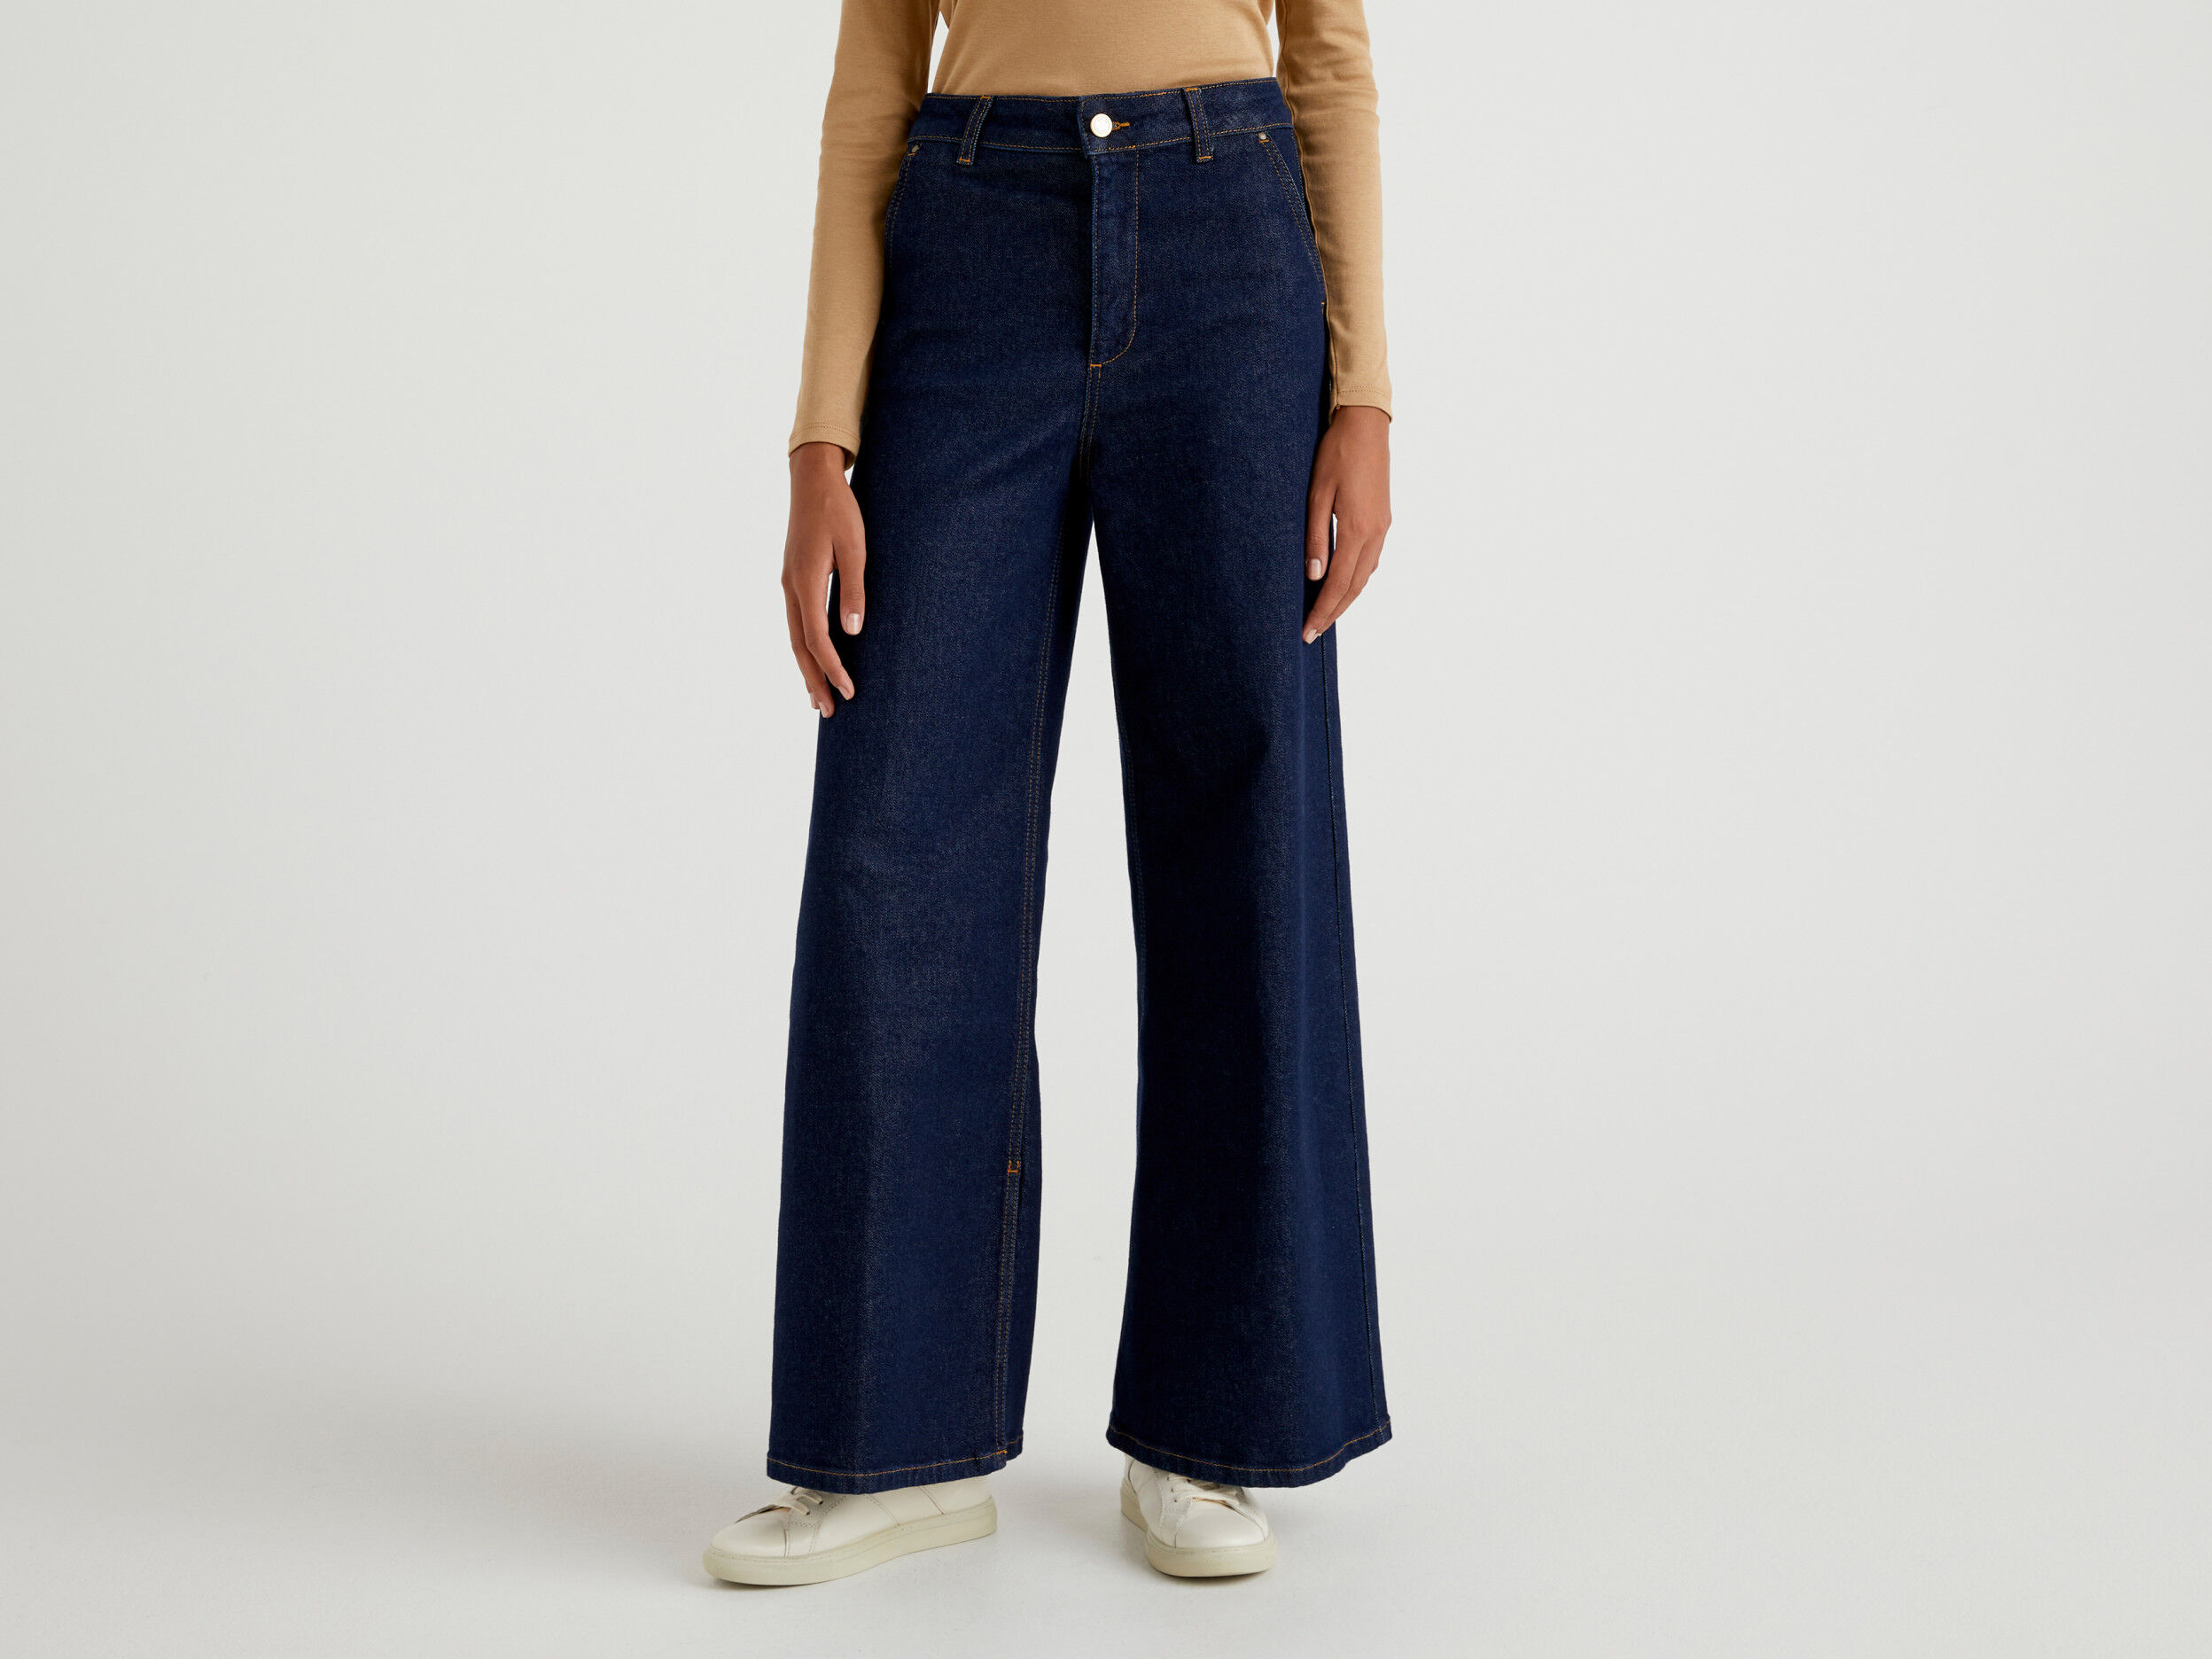 Lady Jeans High Waist Denim Pants Palazzo Trousers Wide Leg Loose Casual  Fashion | eBay